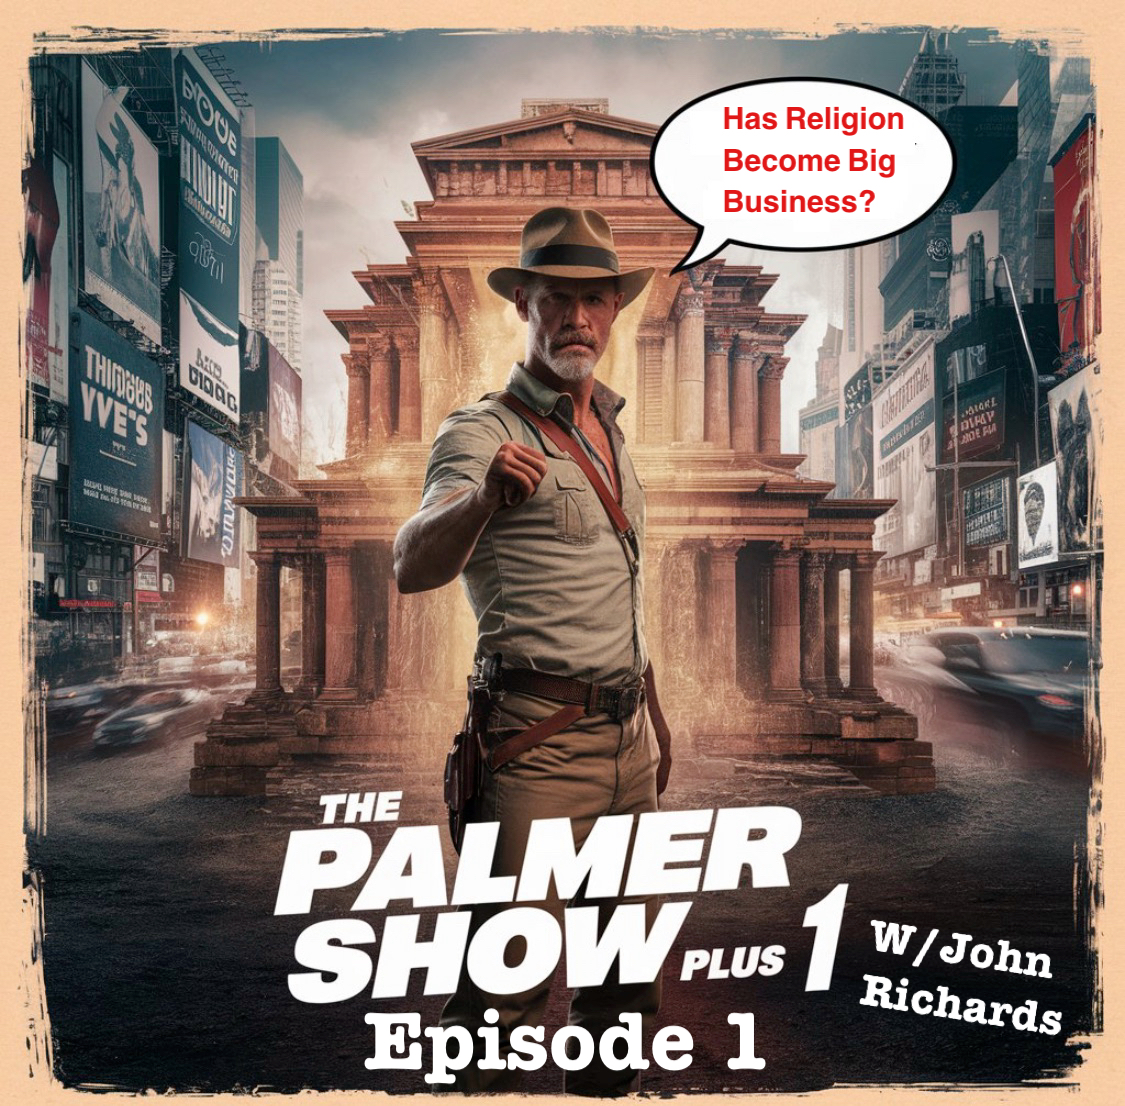 The Palmer Show Plus 1 Episode 1 Has Religion Become Big Business